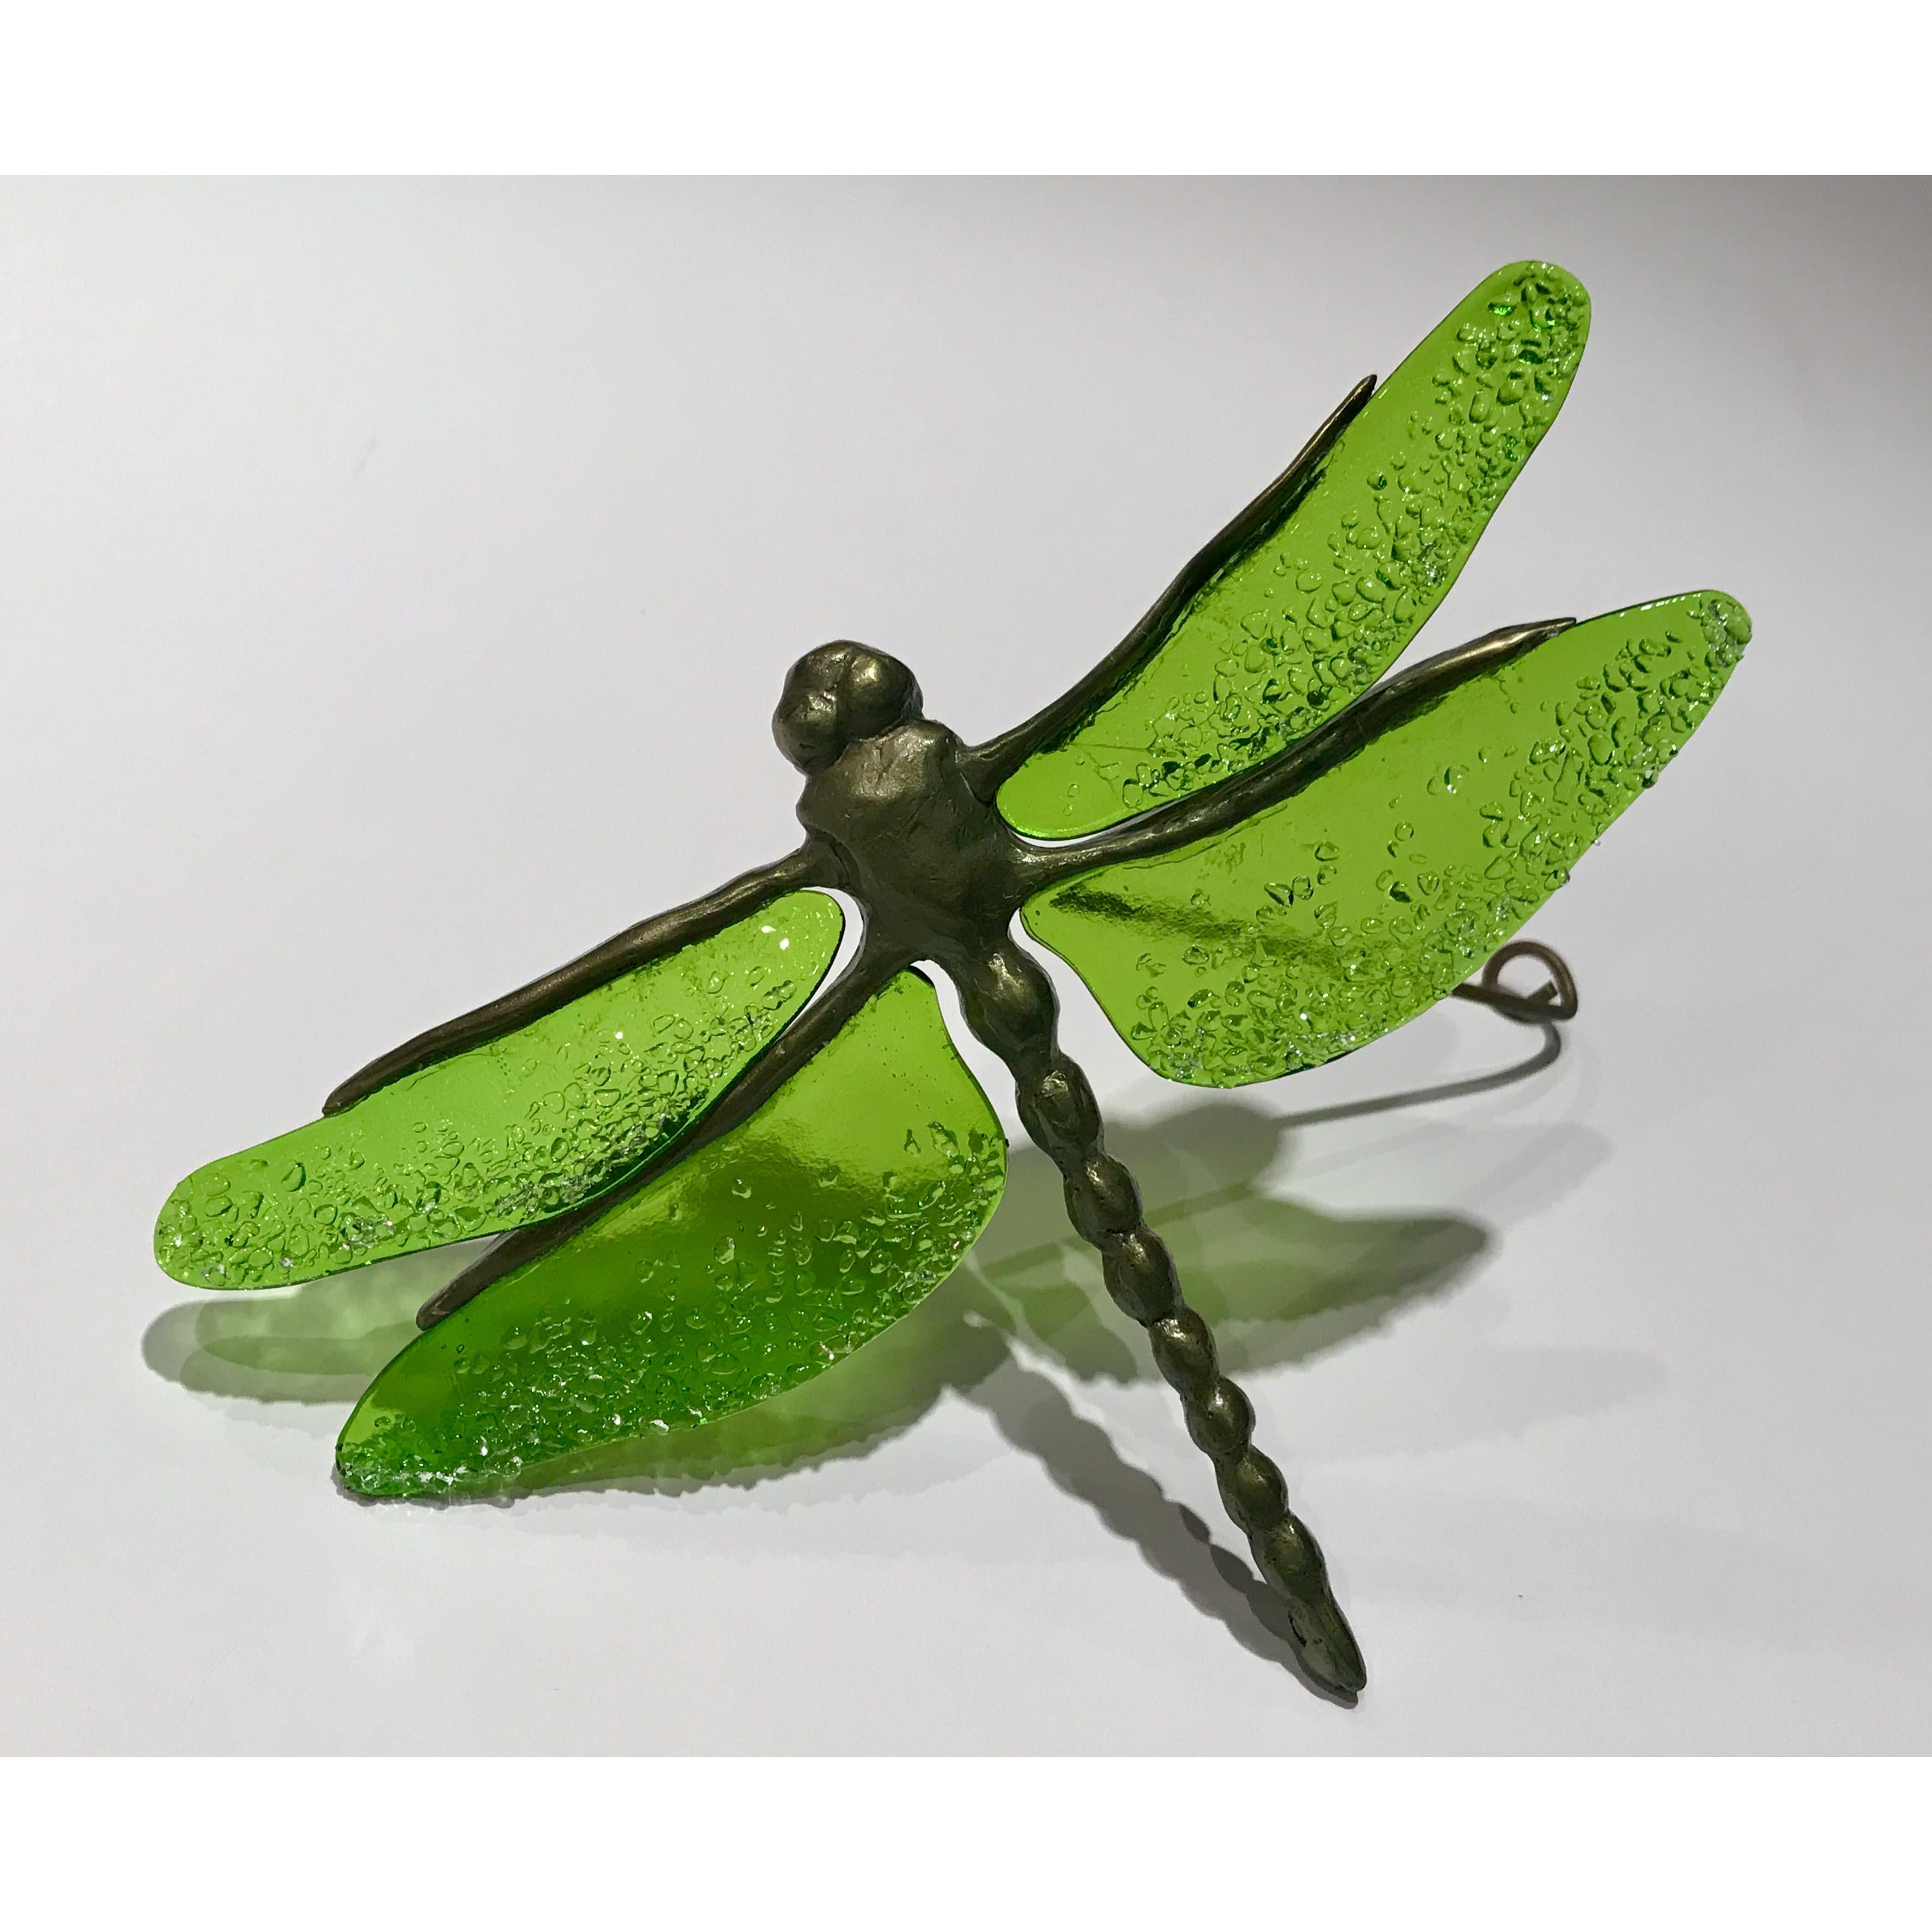 Sandy Graves Figurative Sculpture - Dragonfly #16